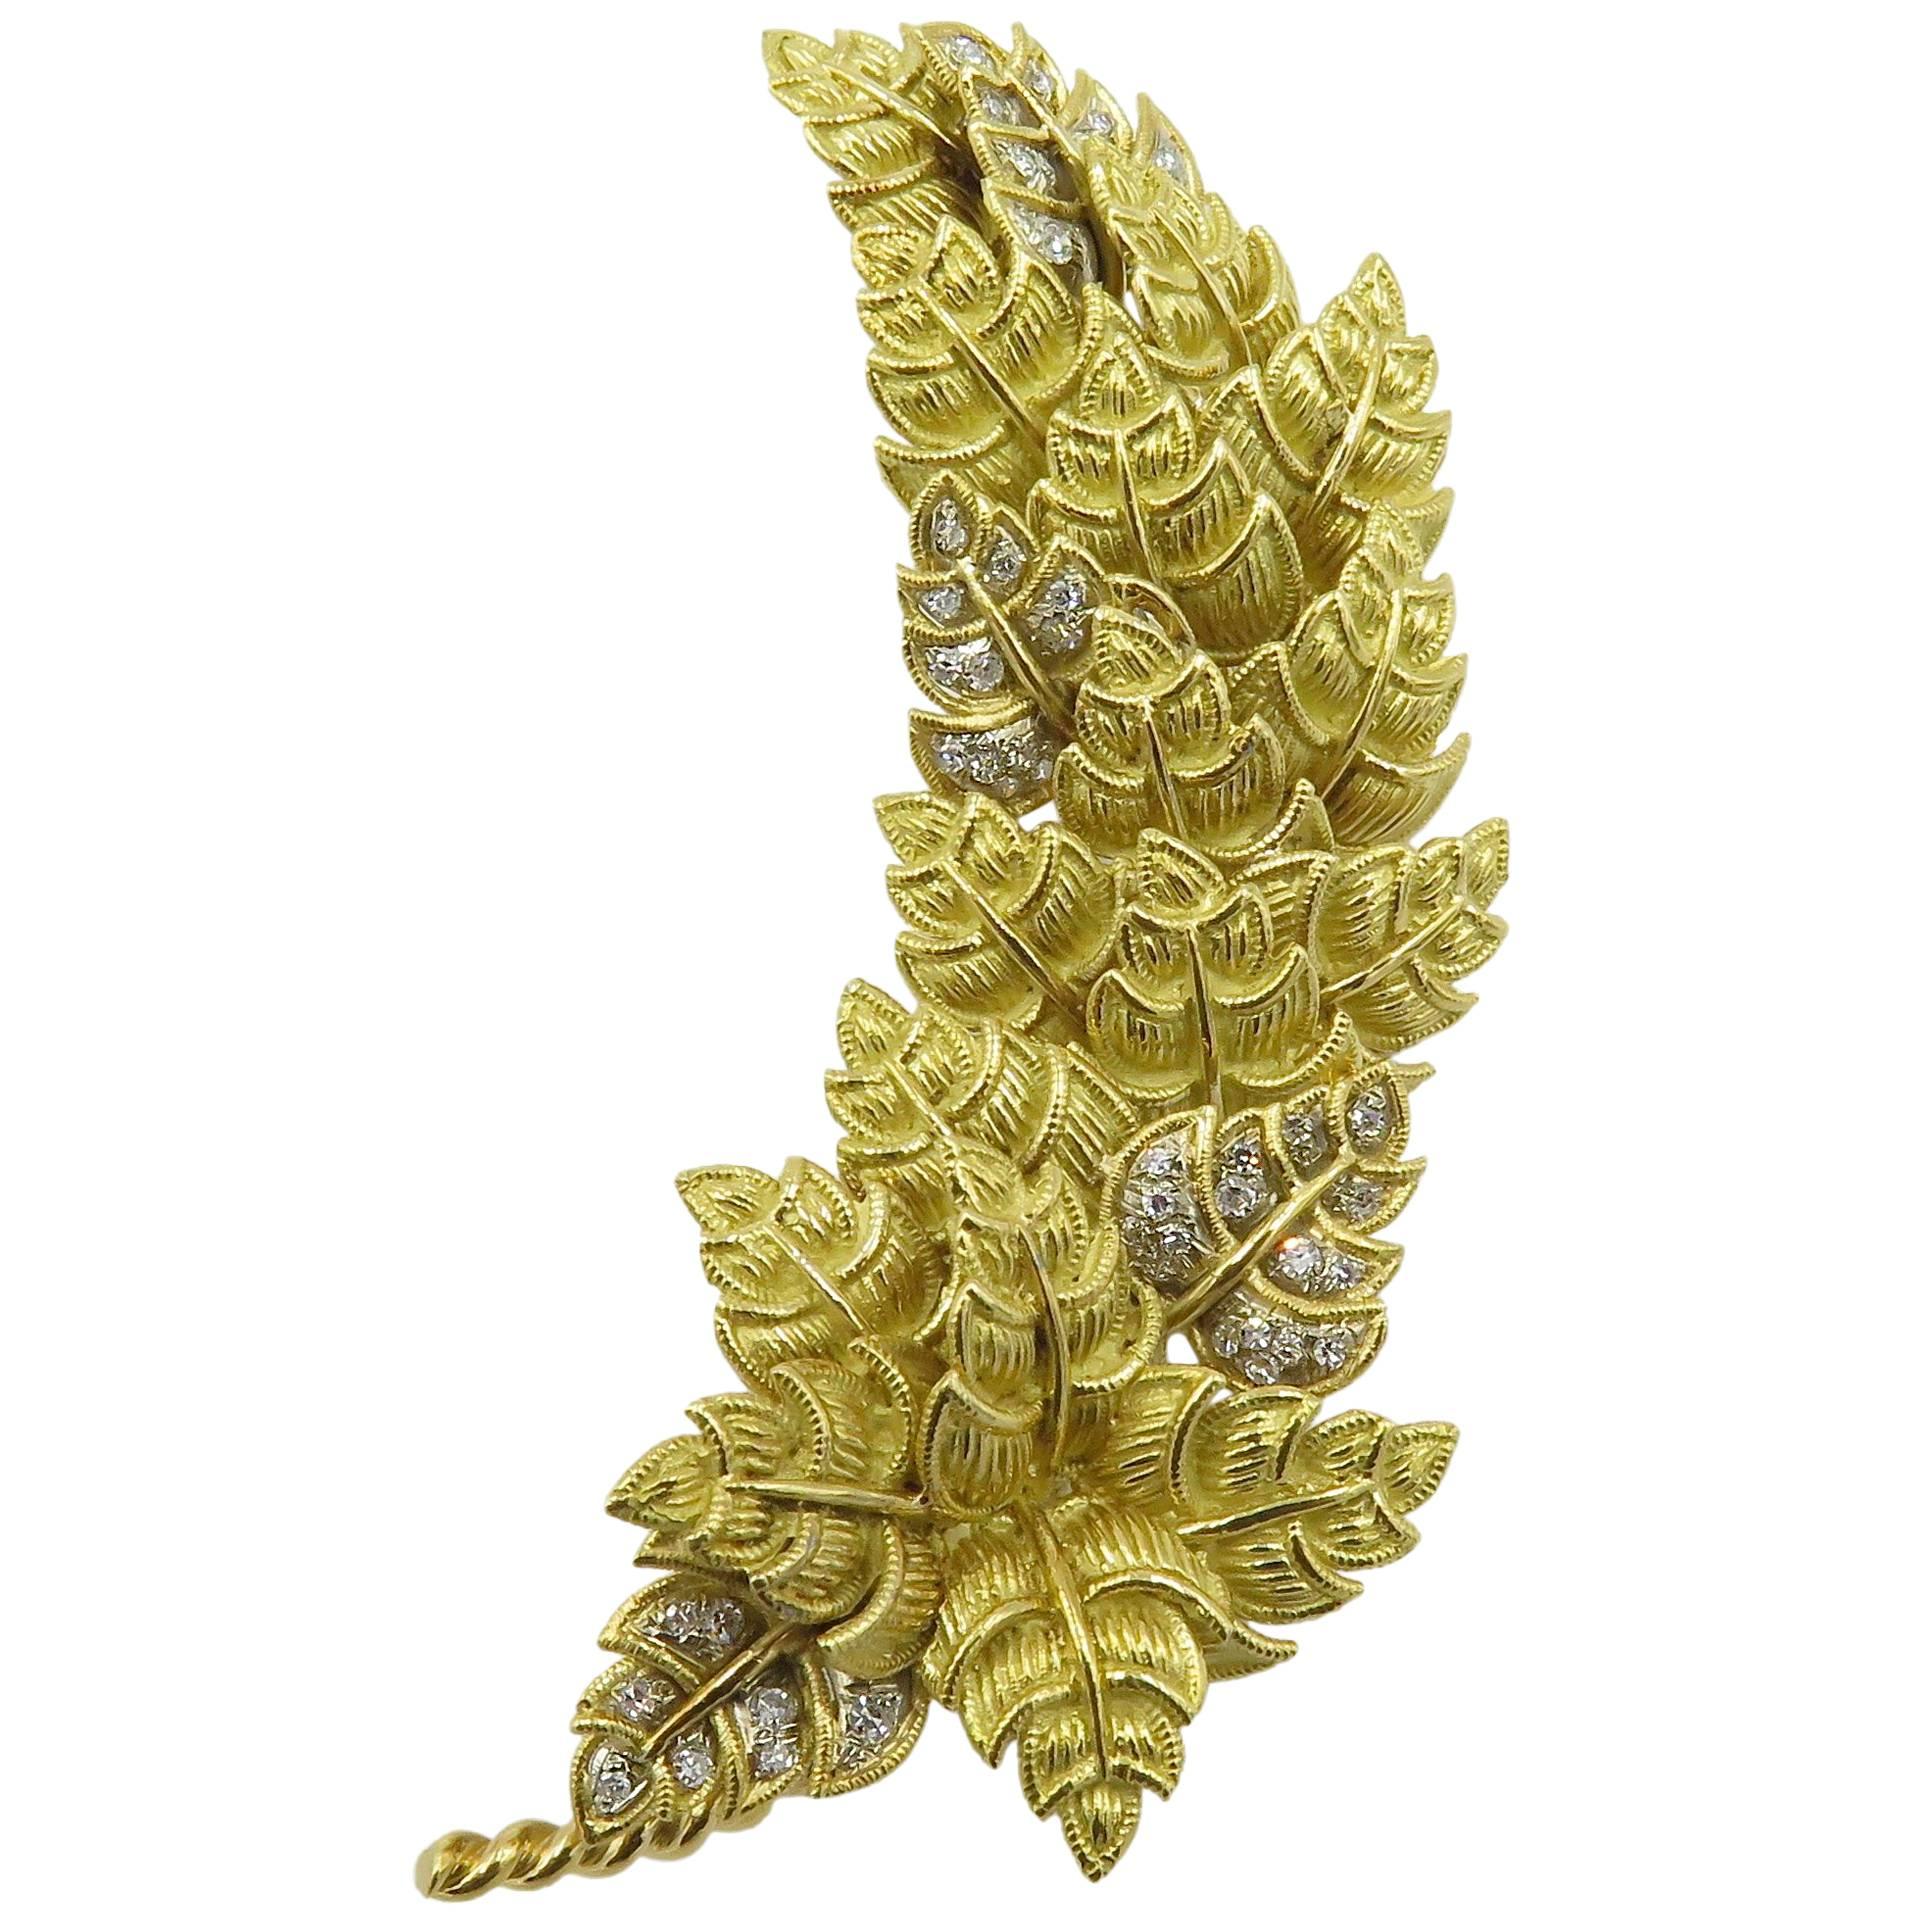 Tiffany & Co. Yellow Gold and Diamond Brooch